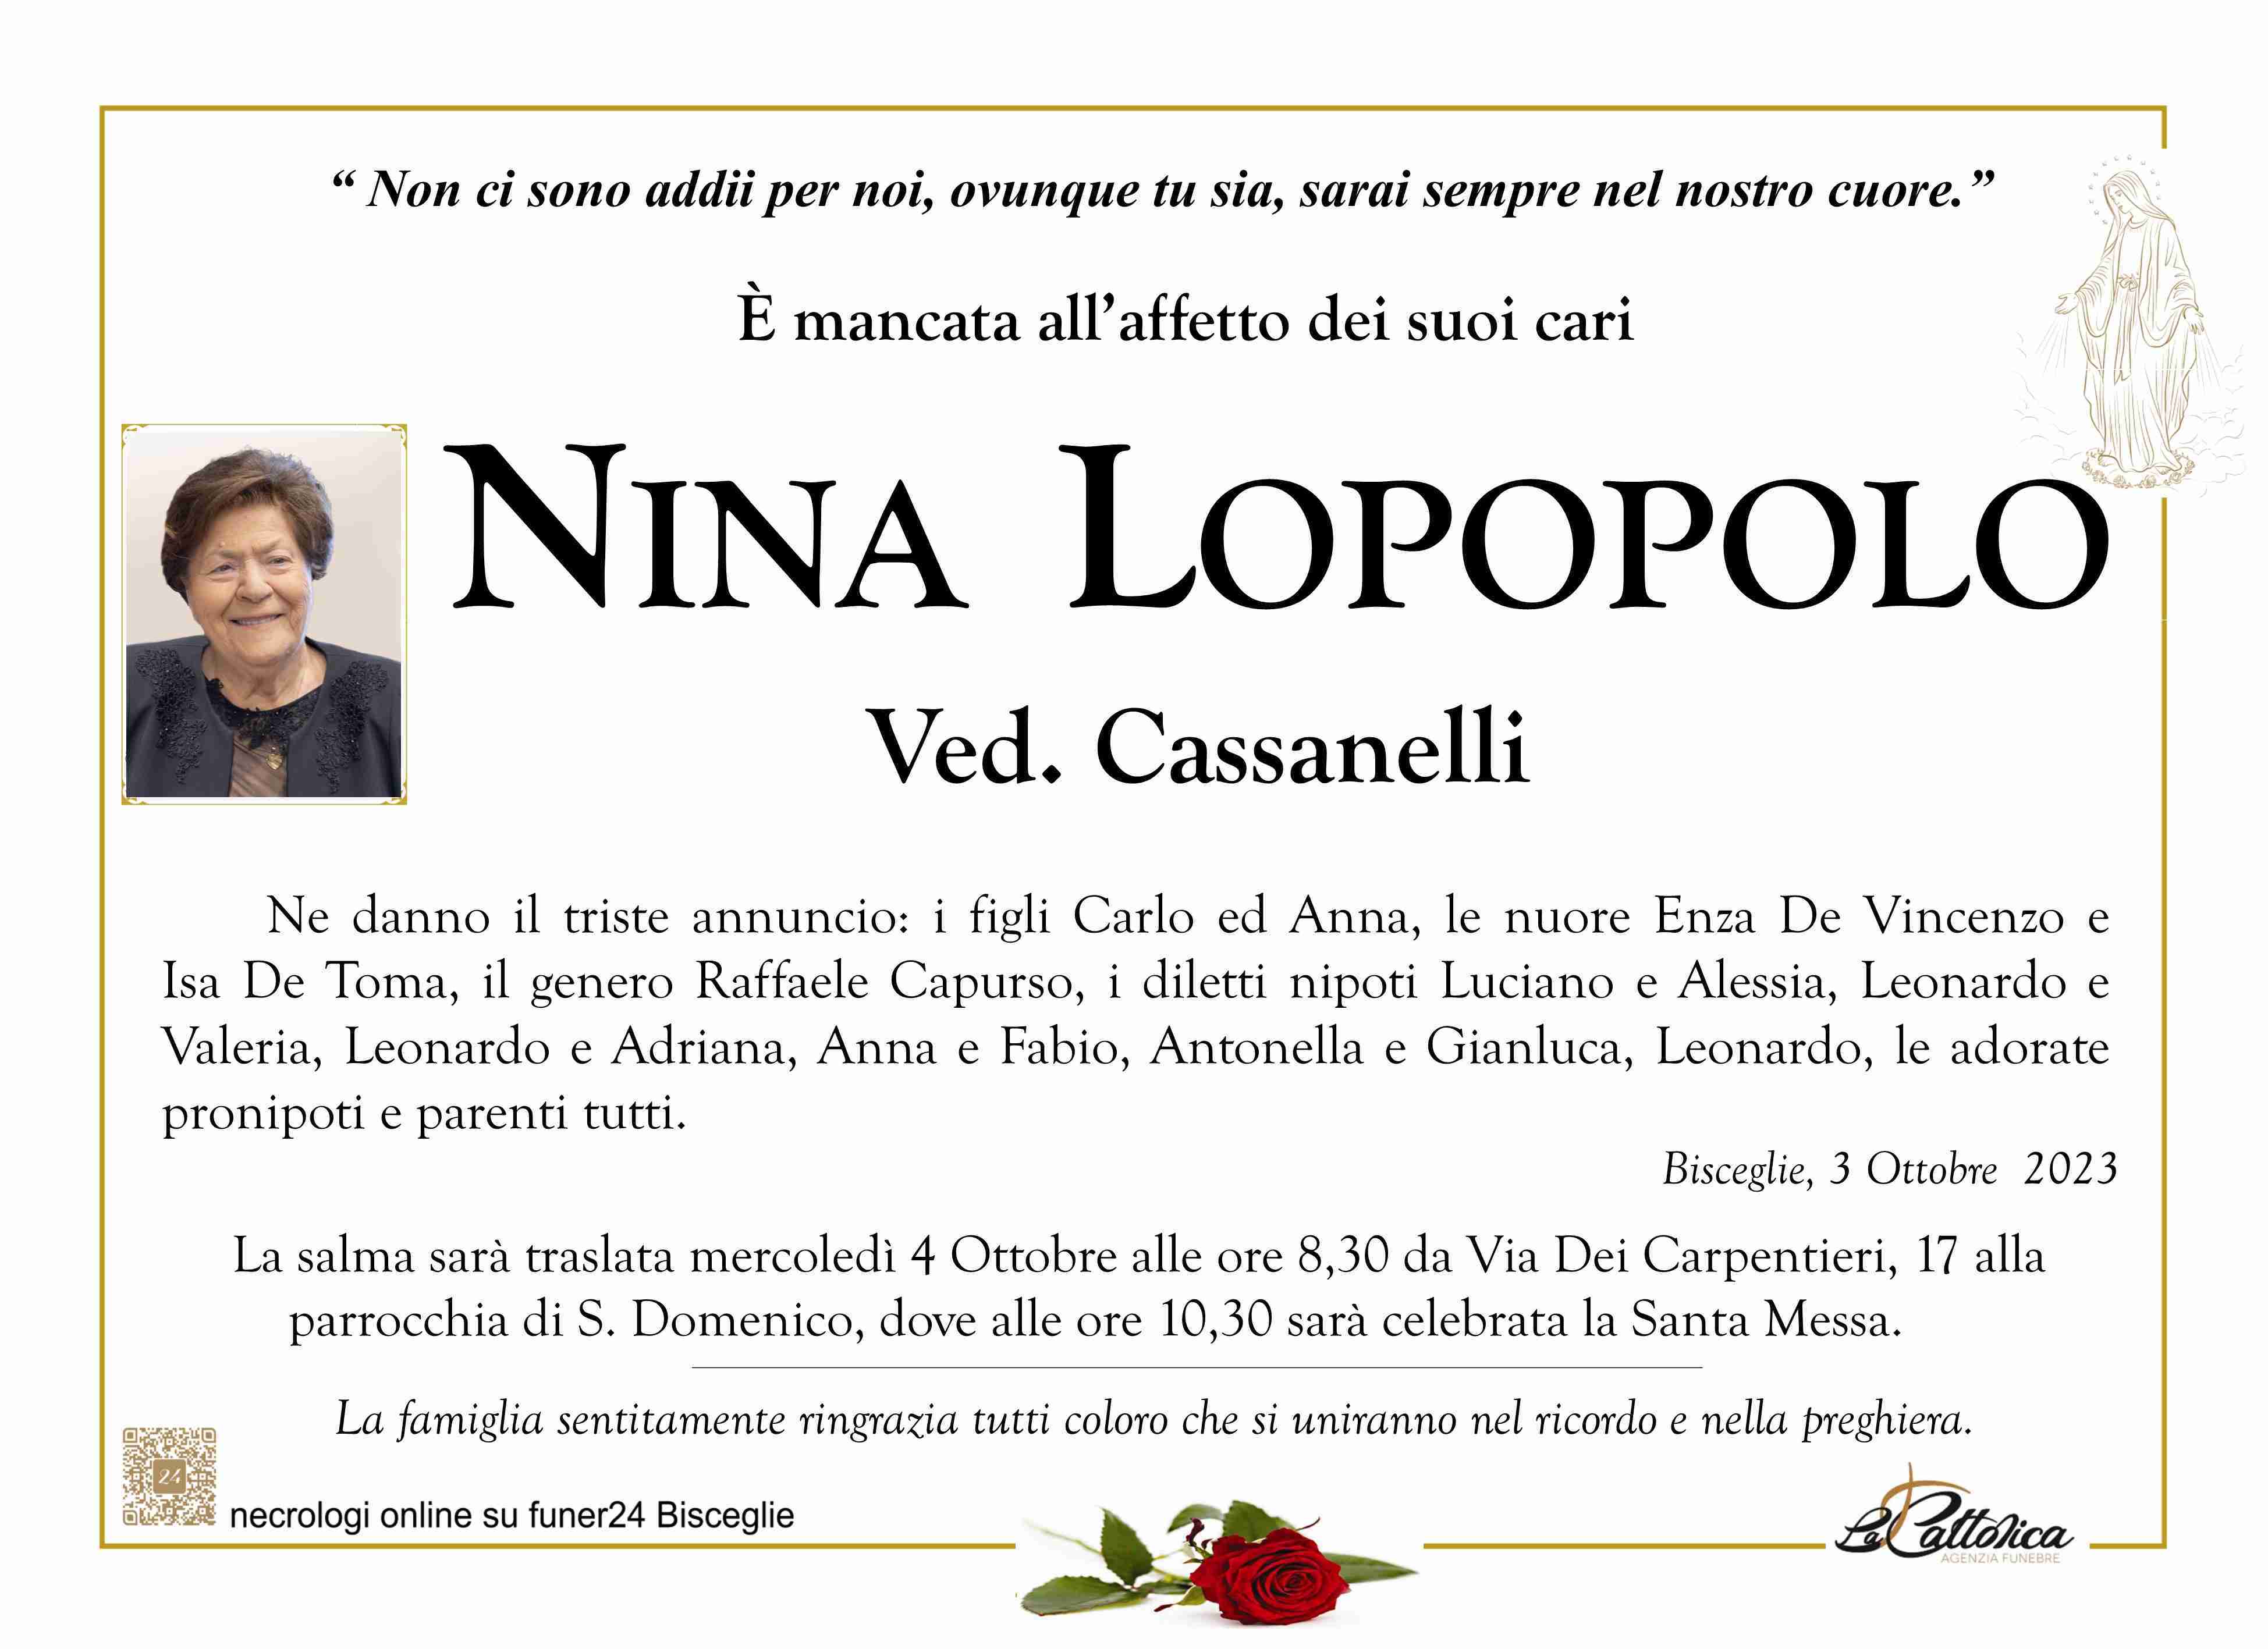 Antonia Lopopolo